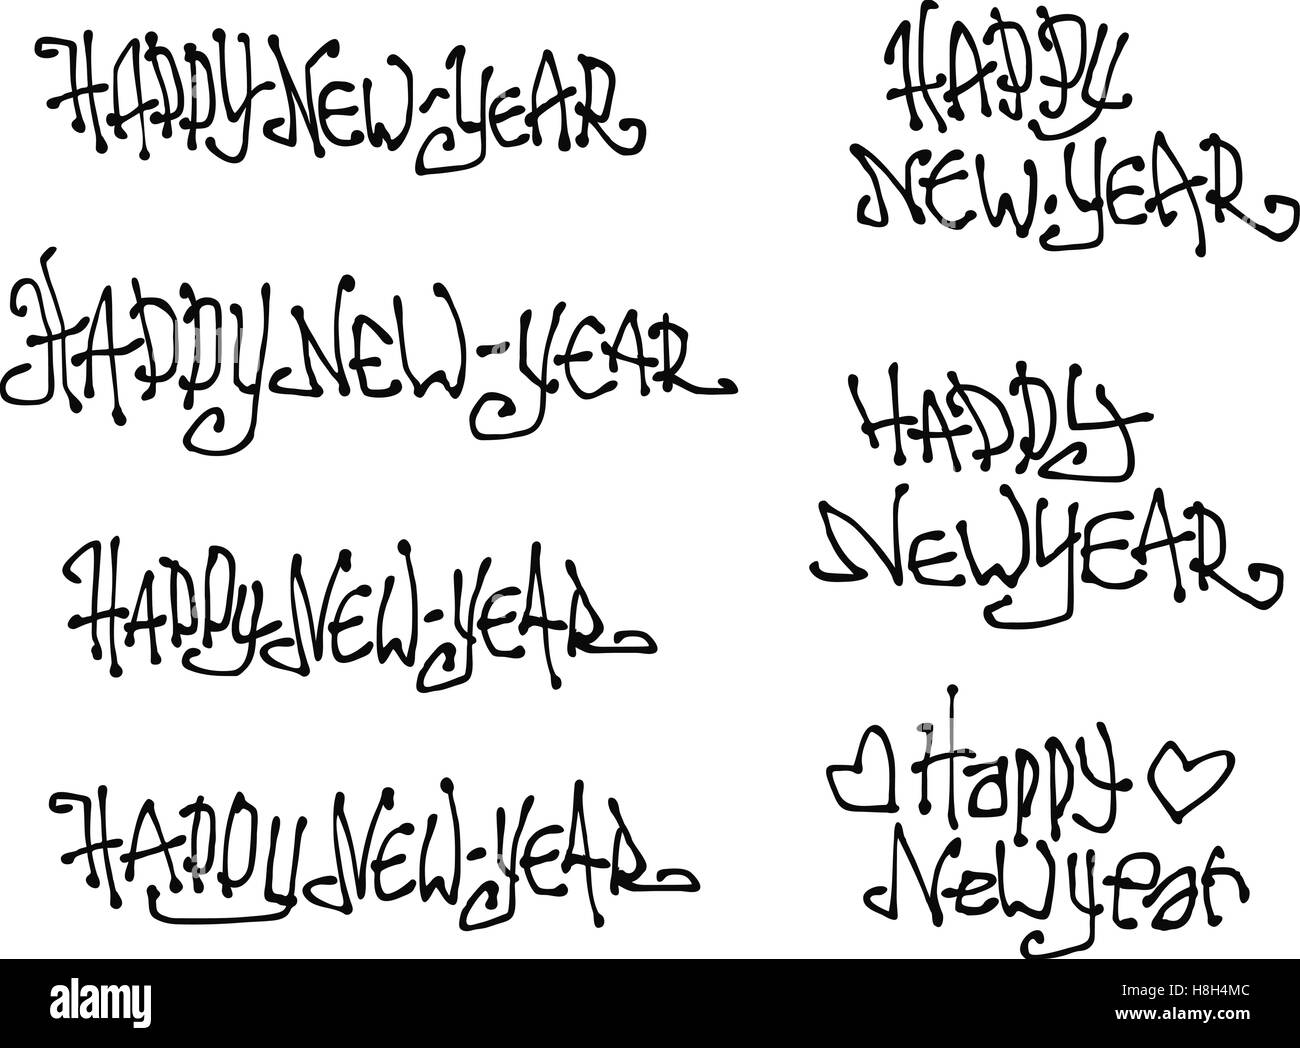 happy new year wish hand drawn liquid curly graffiti fonts Stock Vector